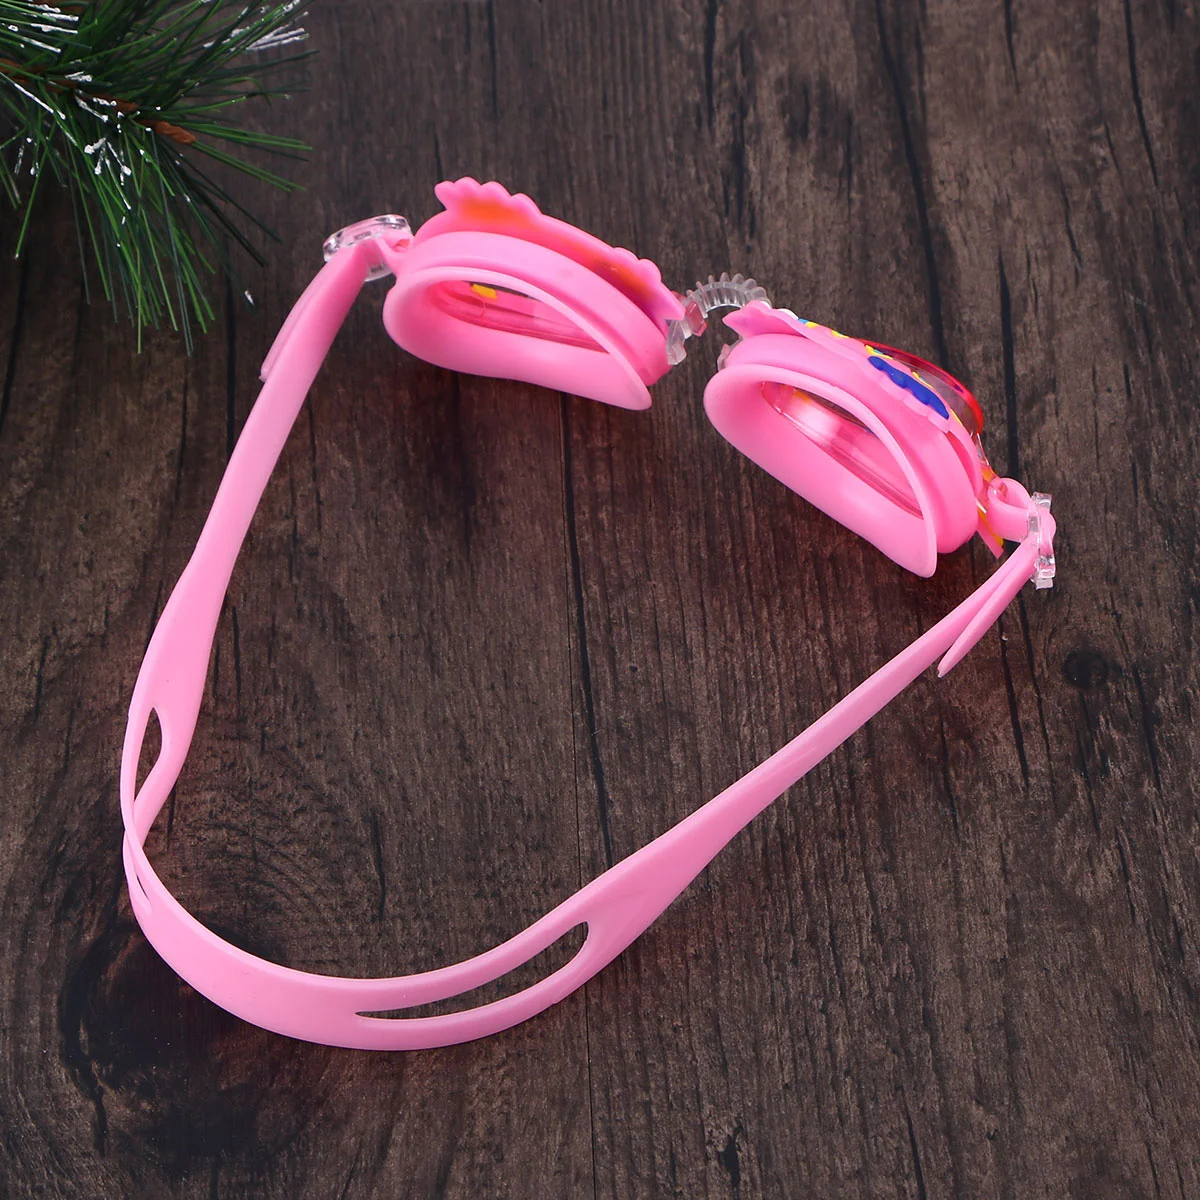 

Waterproof Swimming Goggles Anti-Fog Fish Decoration Children Swimming Glasses Beach Pool Accessories Eyewear(Pink)